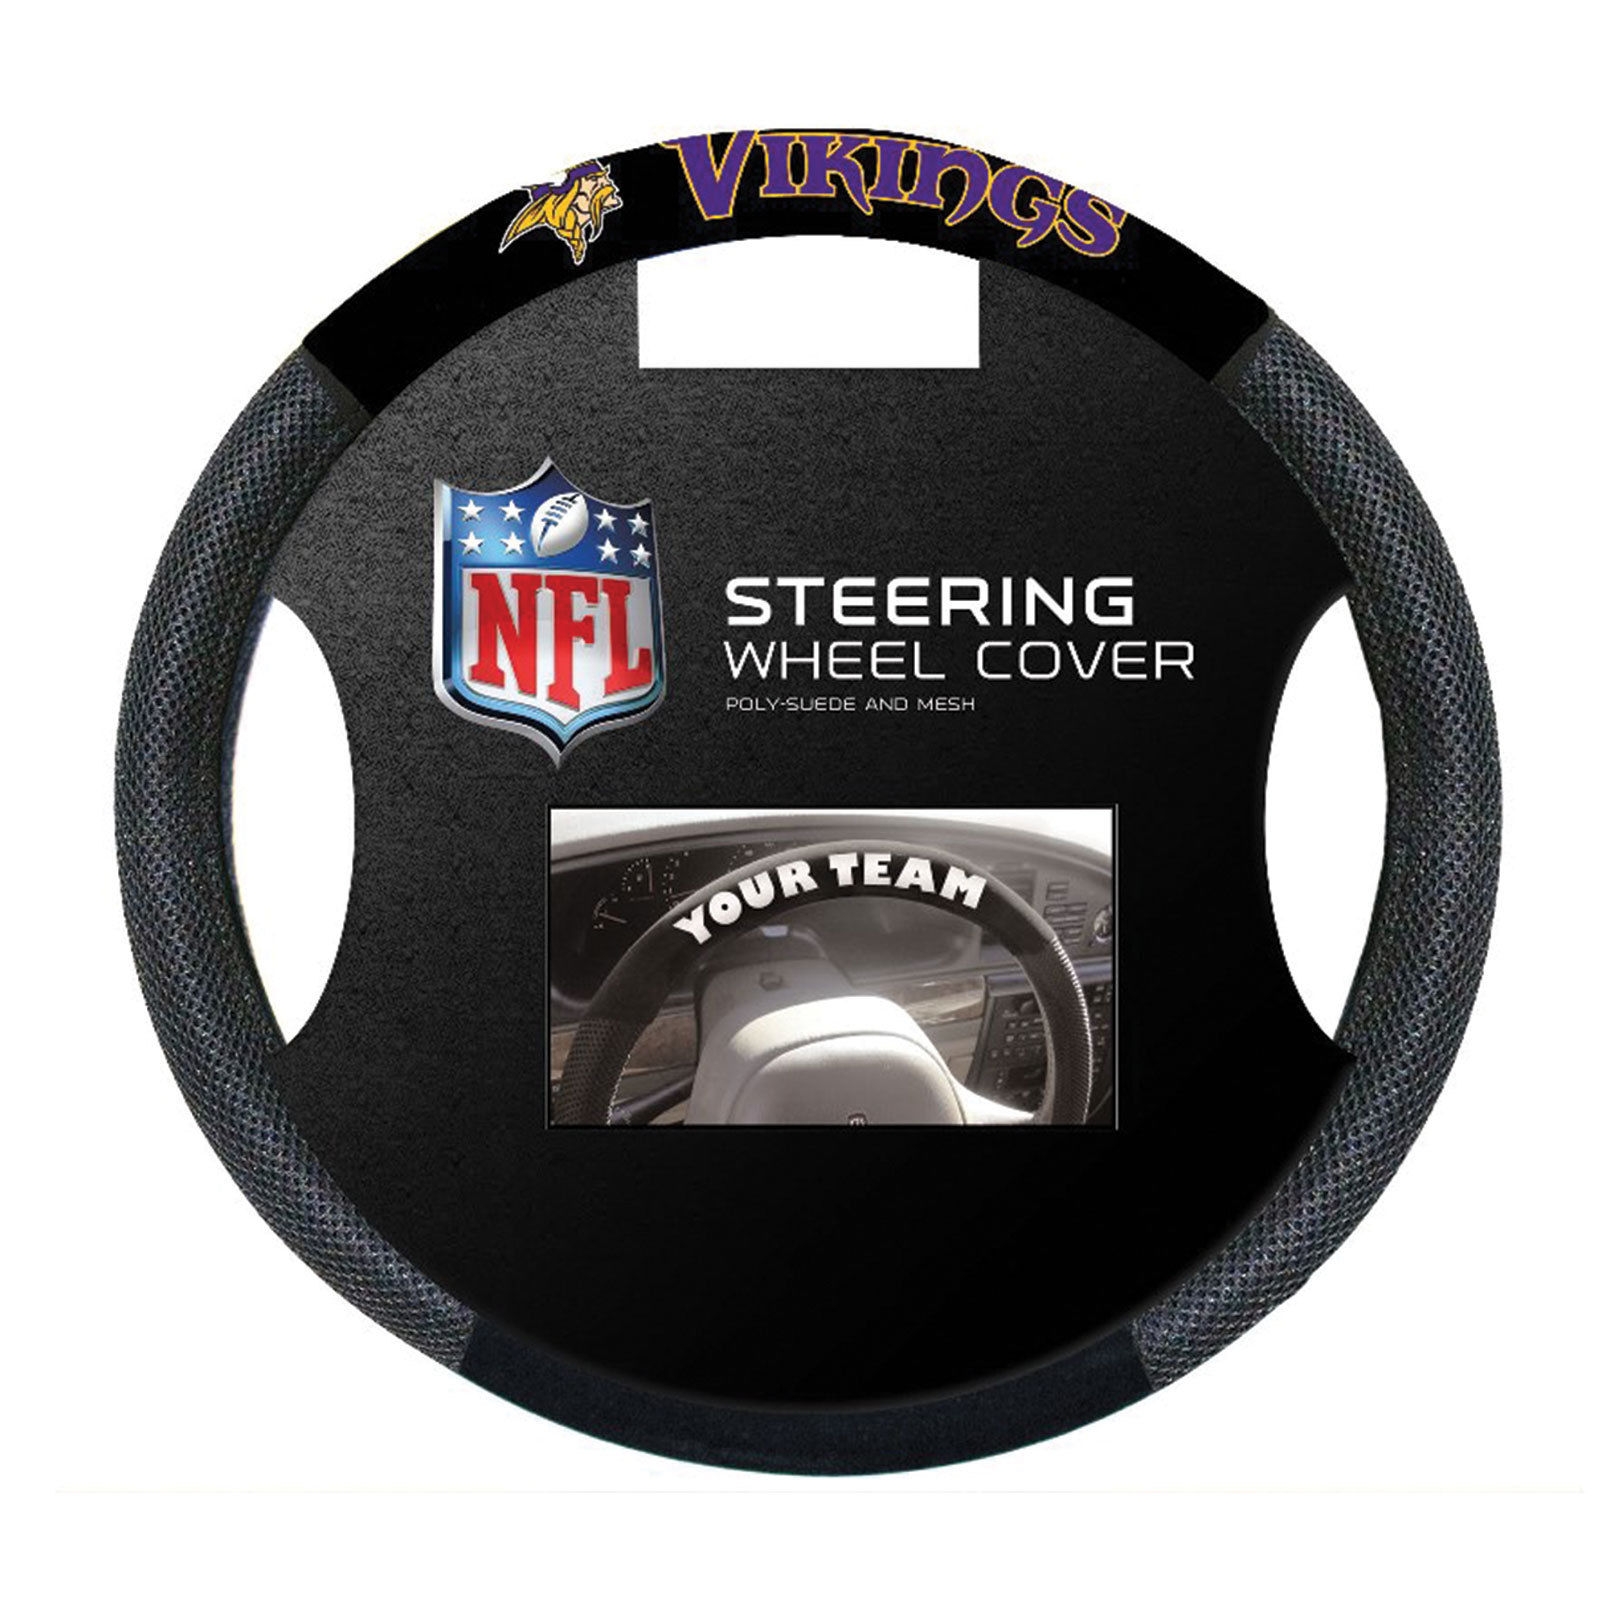 NFL Minnesota Vikings Steering Wheel Cover 